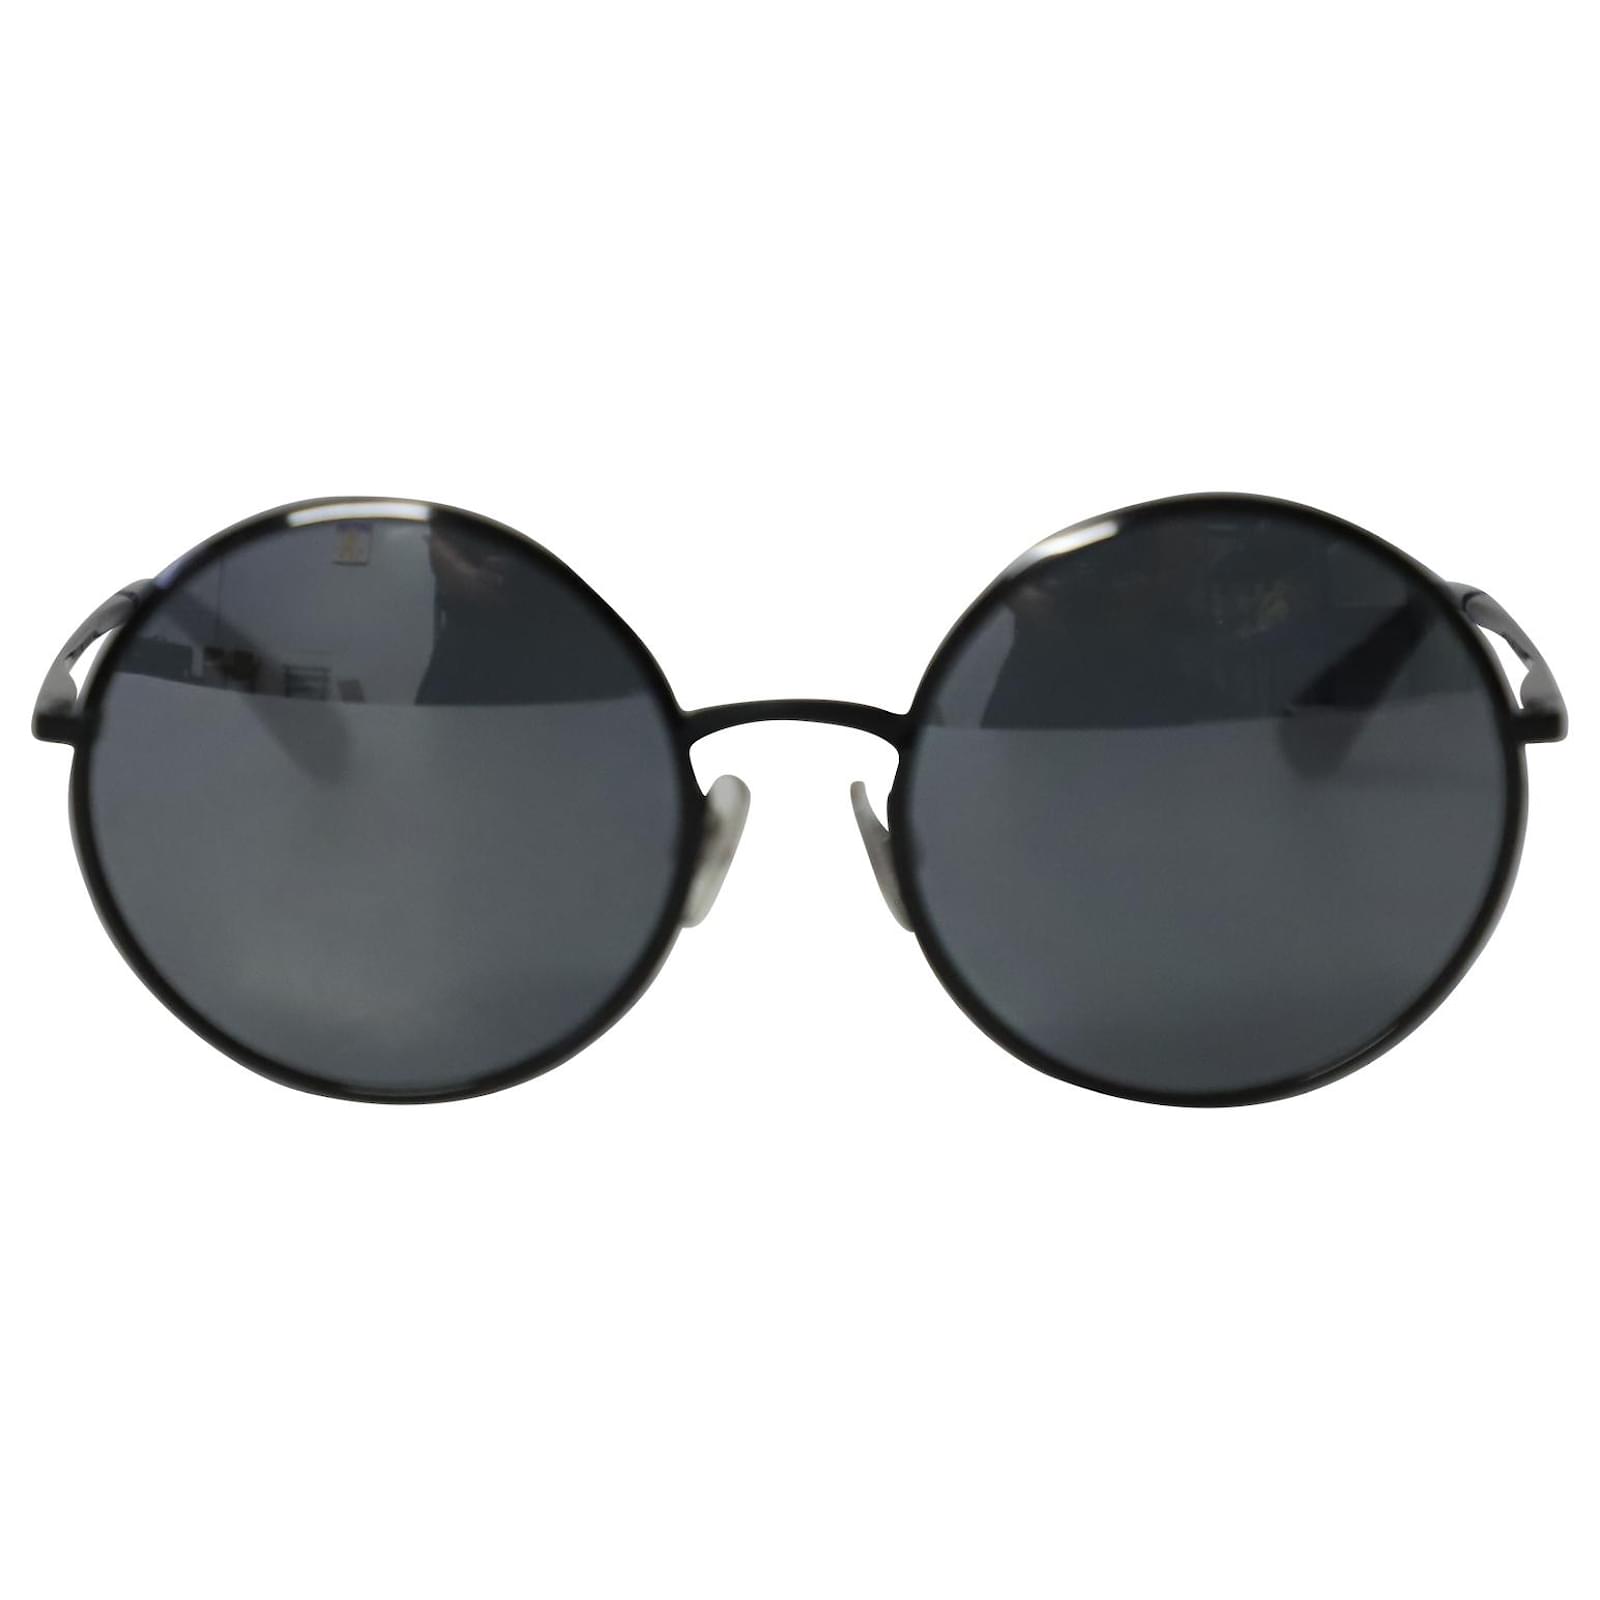 Dolce & Gabbana DG2205 Oversized Round Sunglasses in Black Metal ref ...